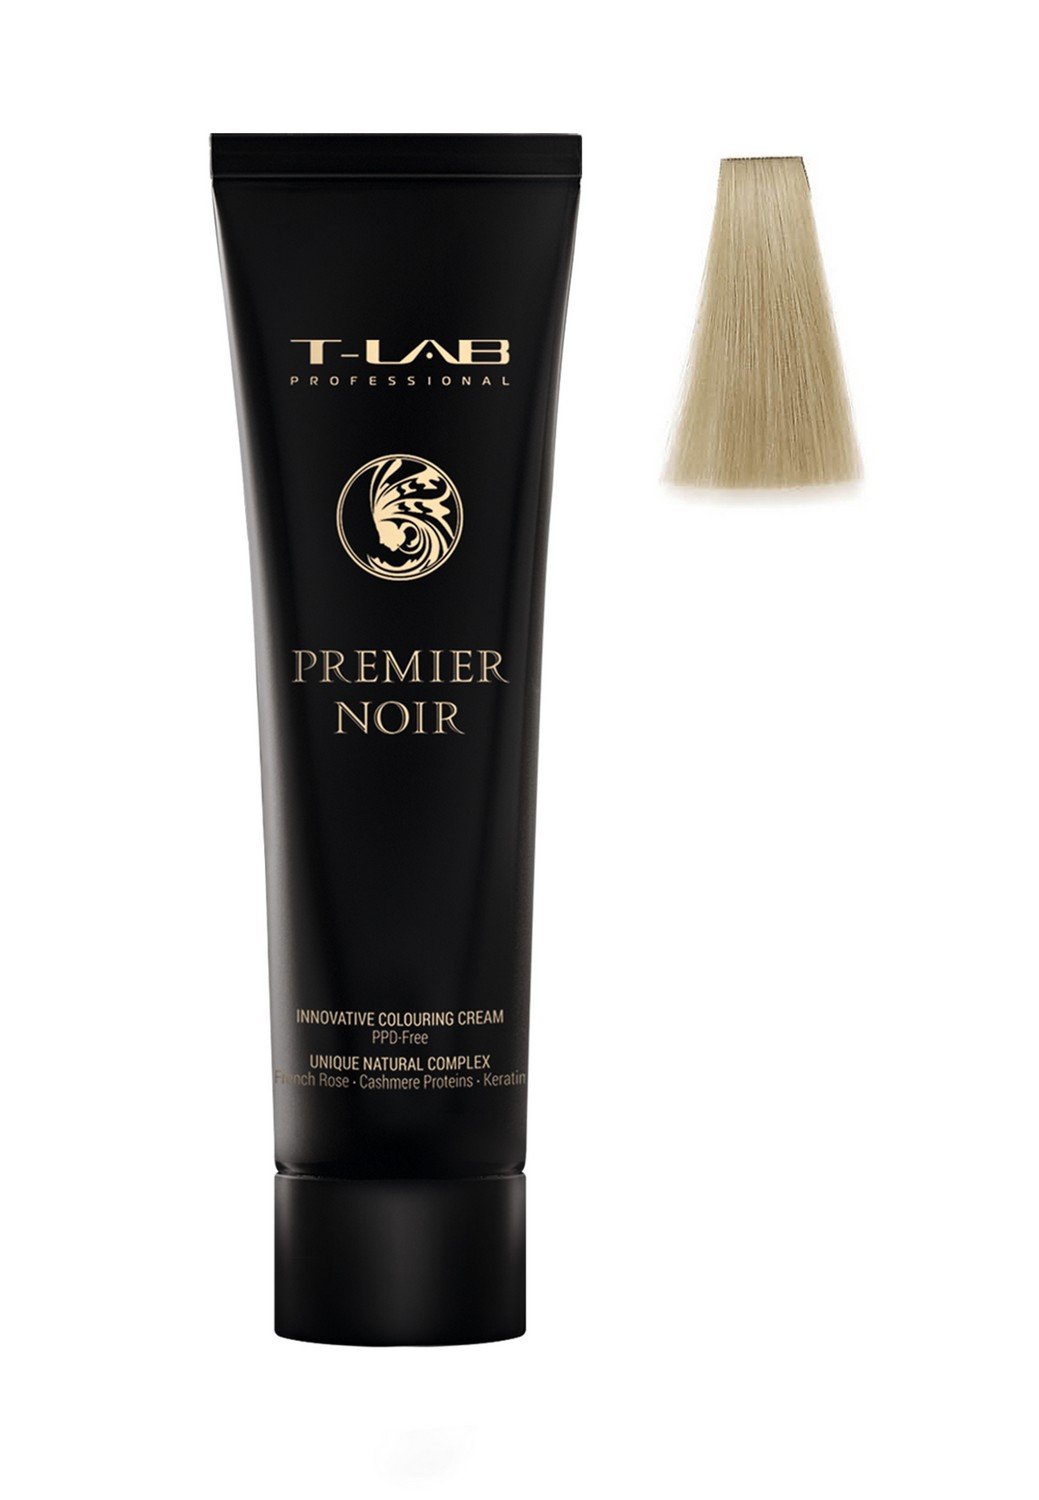 Крем-краска T-LAB Professional Premier Noir colouring cream, оттенок 900 (natural super blonde) - фото 2